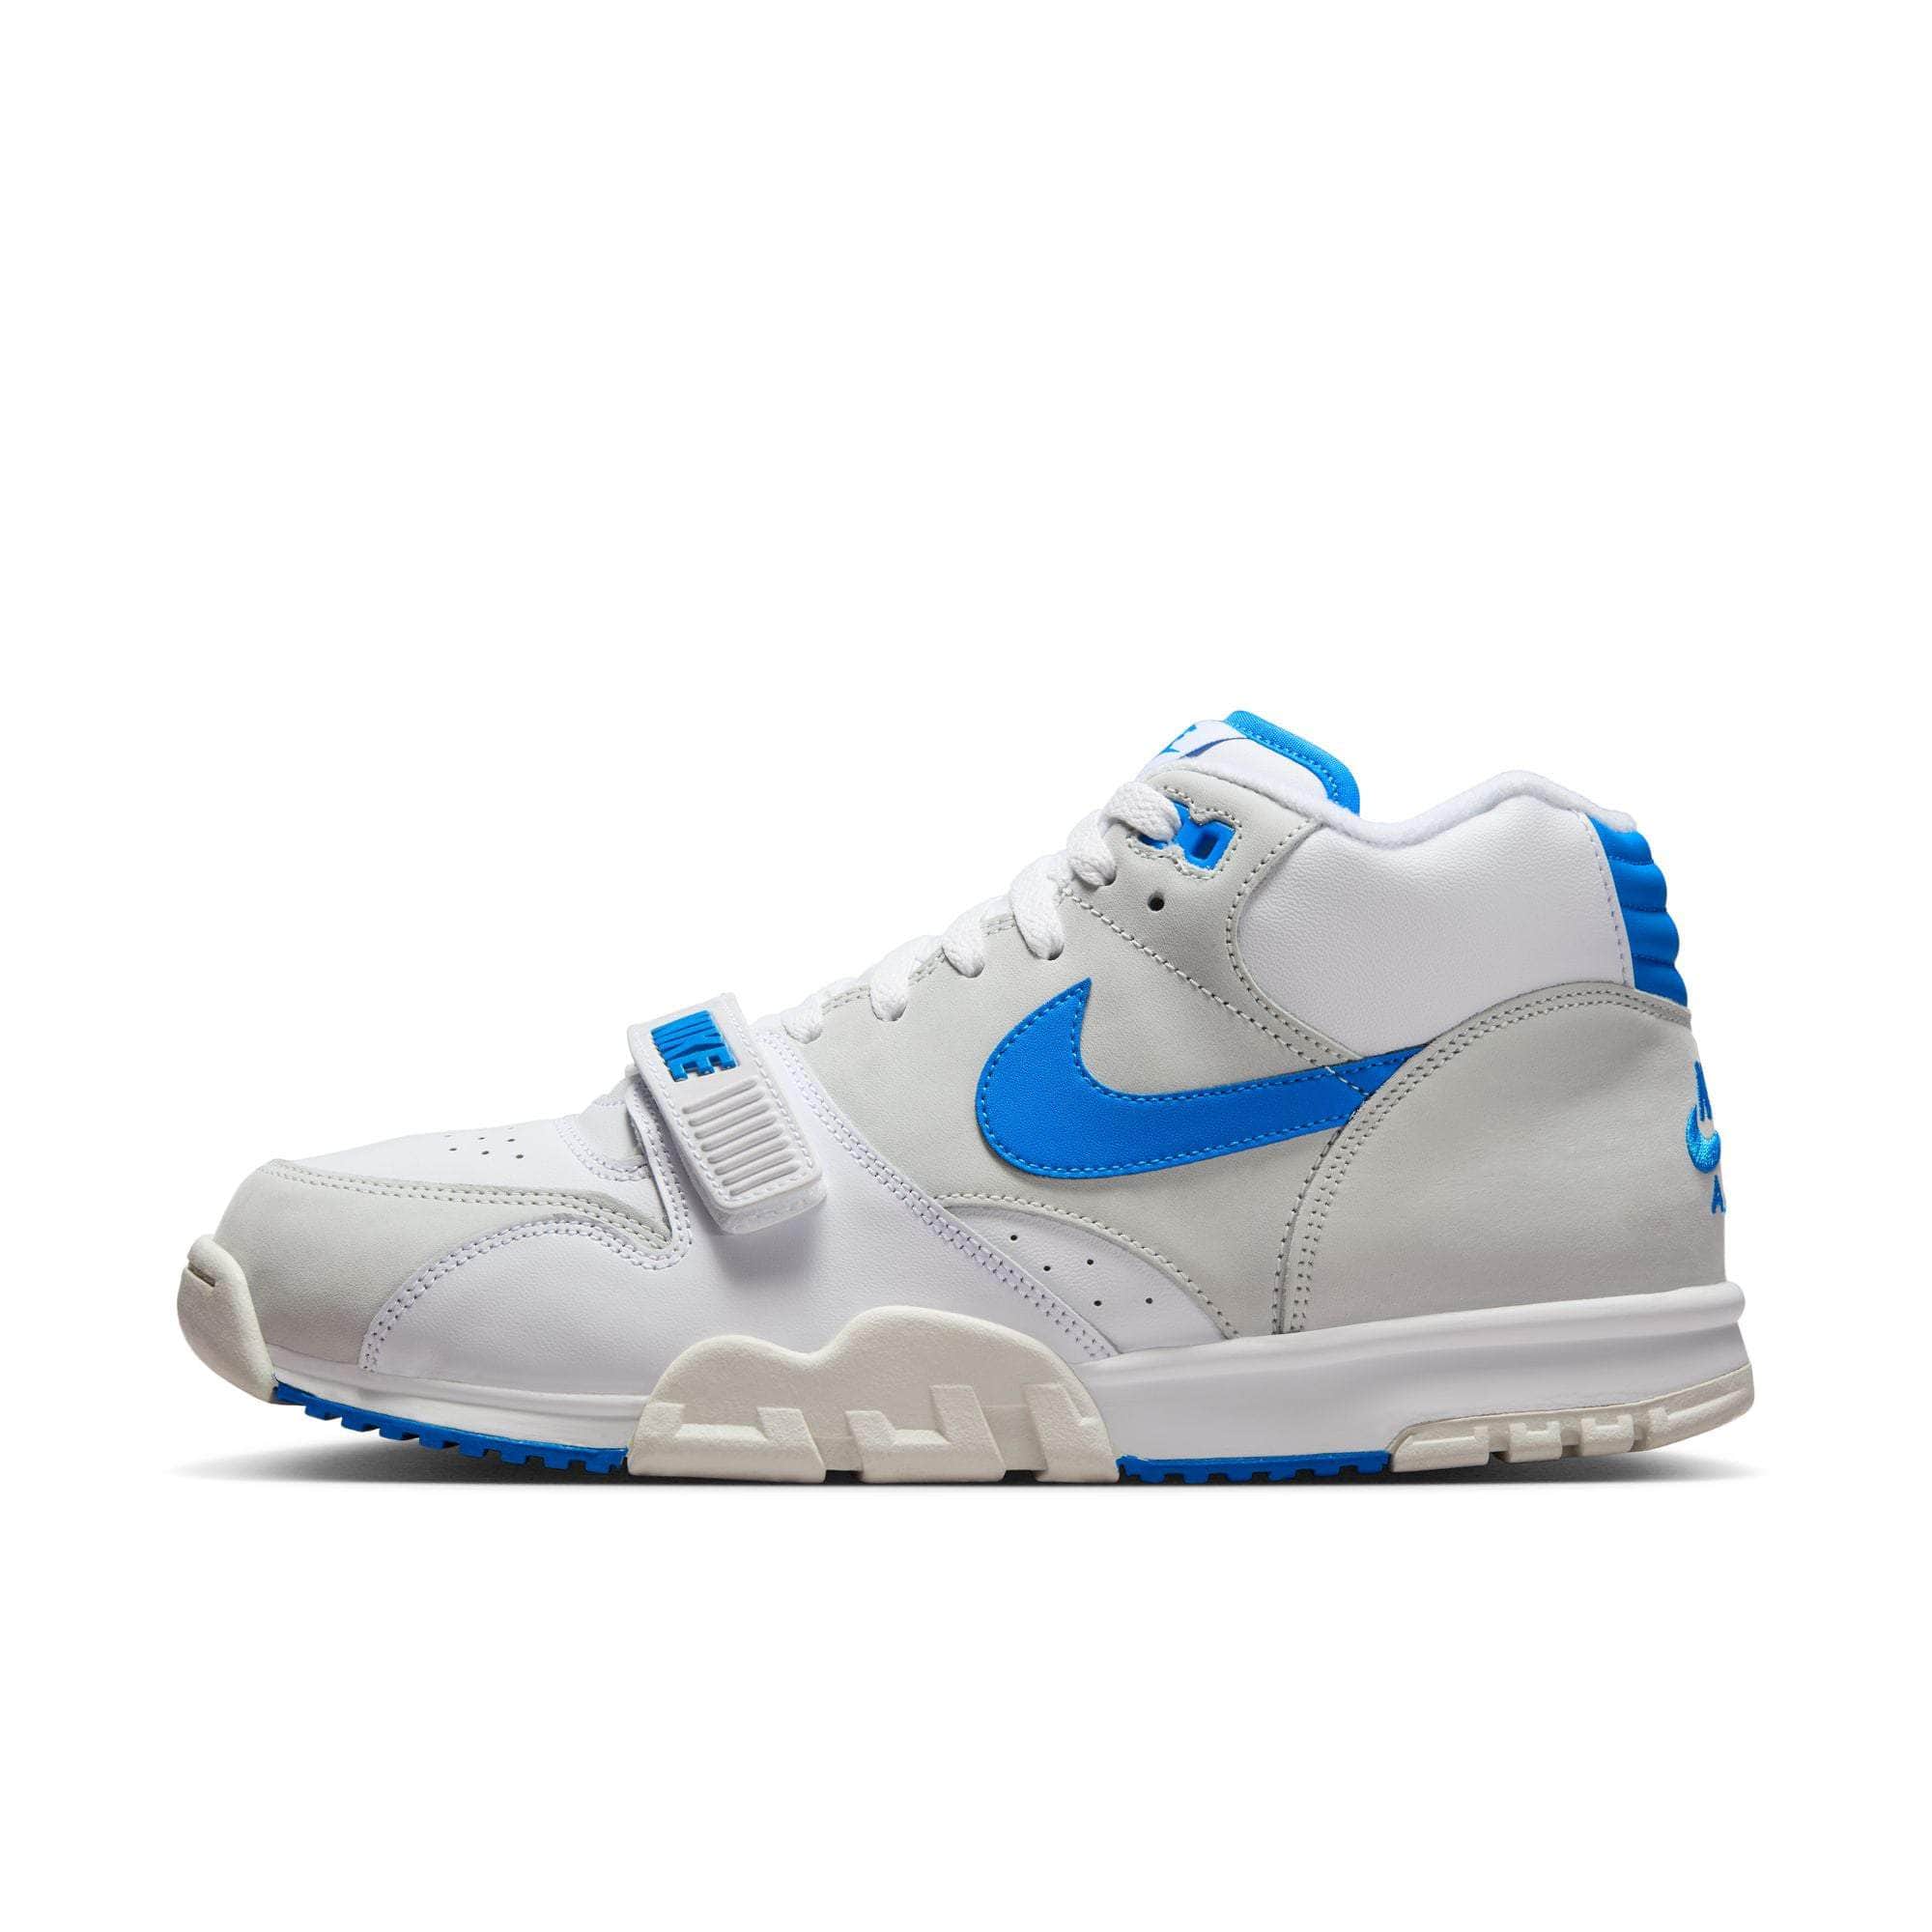 Men's shoes Nike Air Presto Mid Utility Anthracite/ University Blue-Summit  White